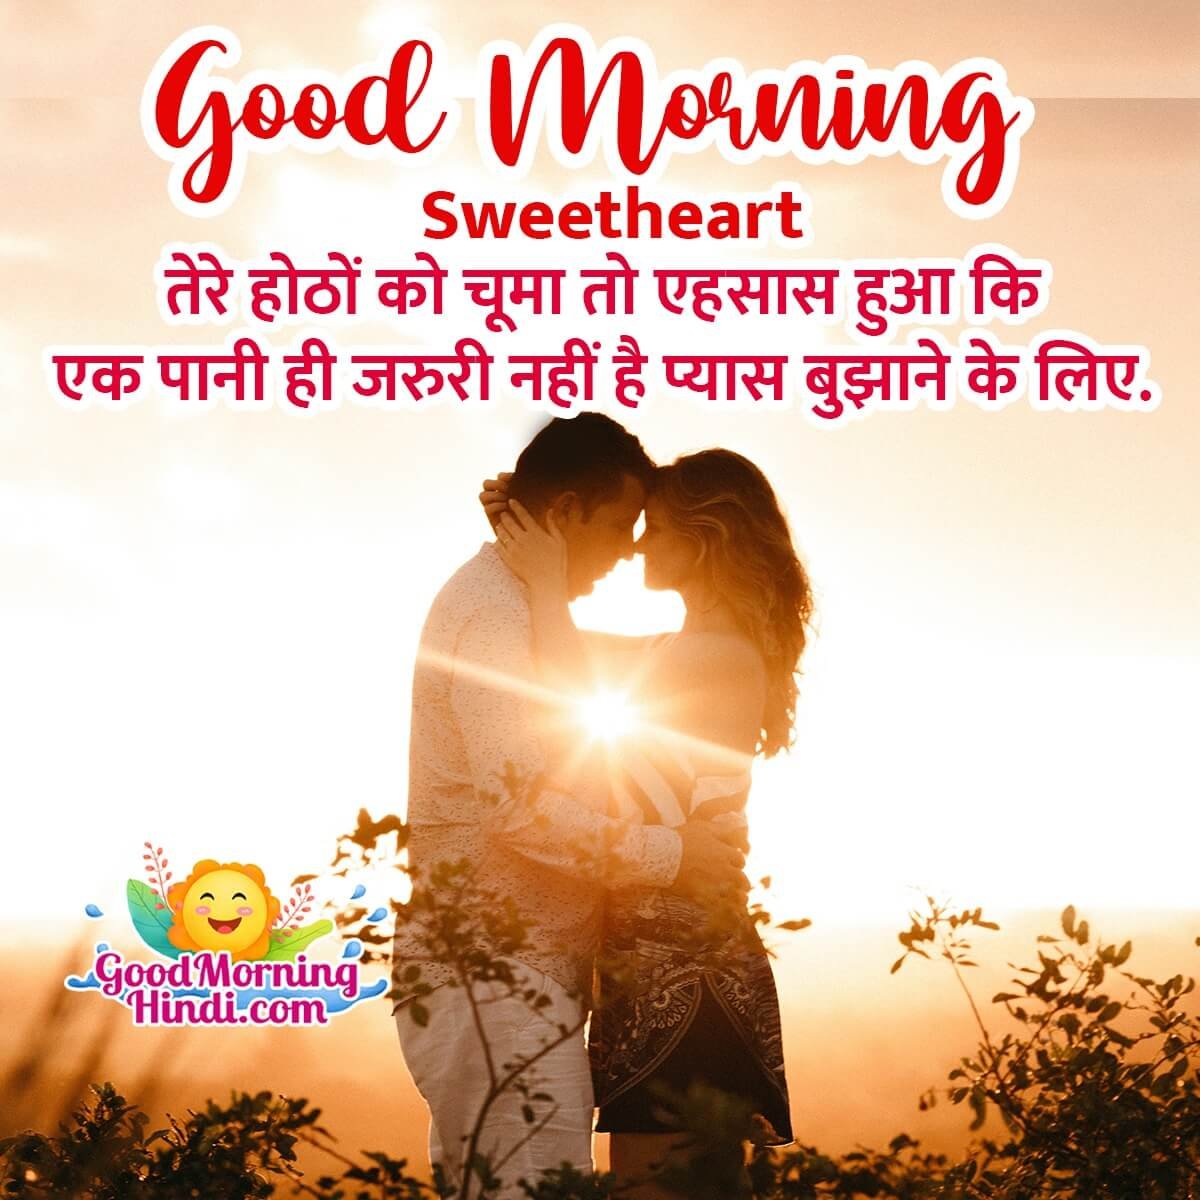 Good Morning Love Quotes In Hindi